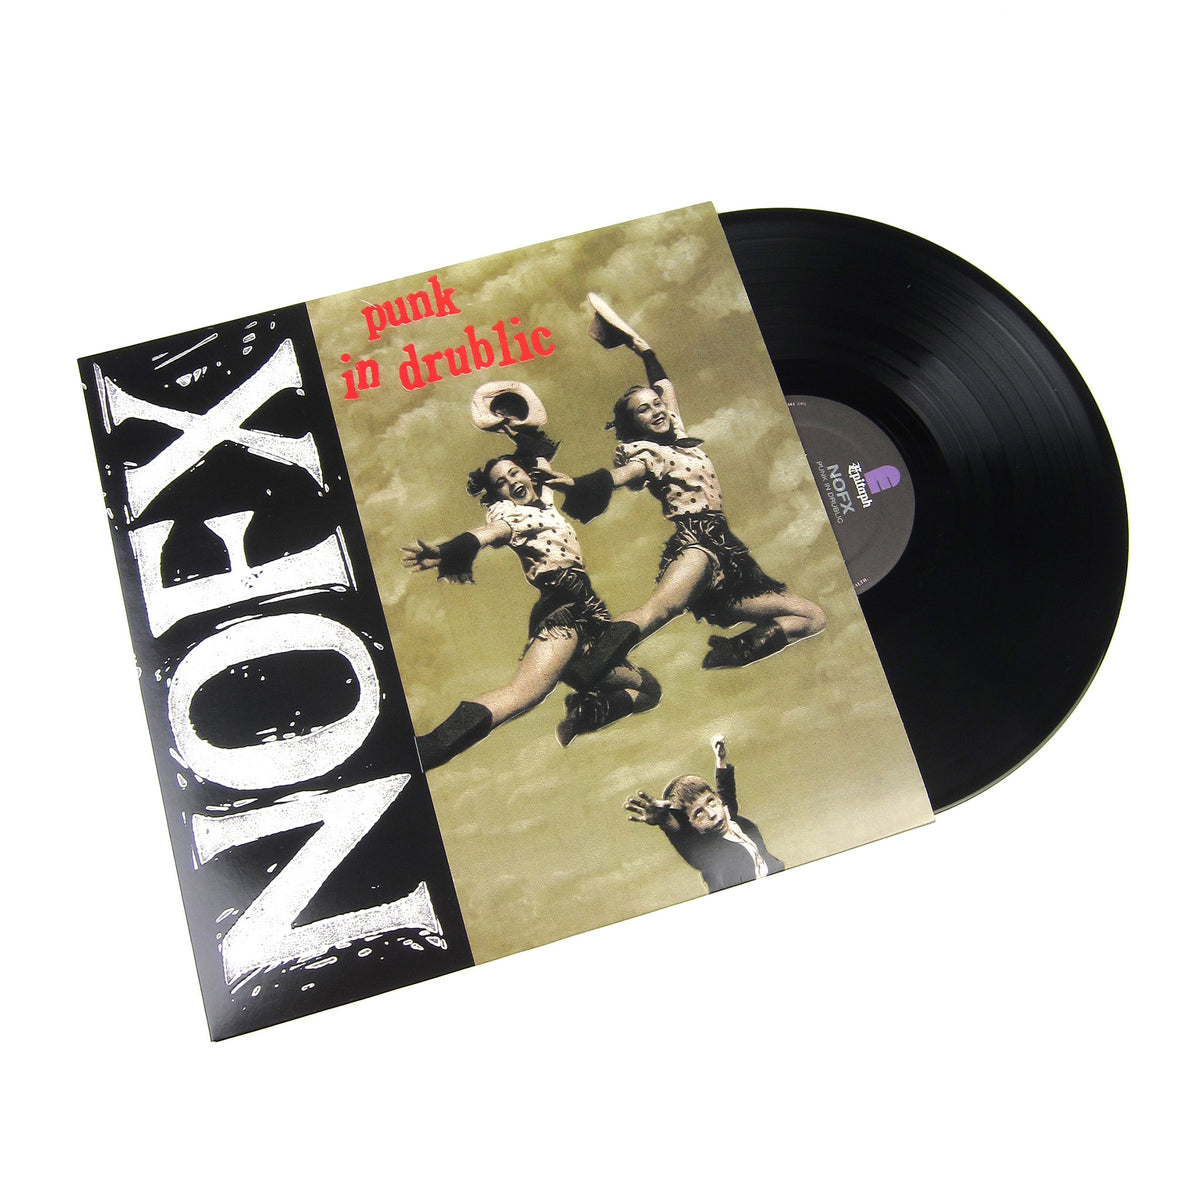 NOFX レコードBOXセット